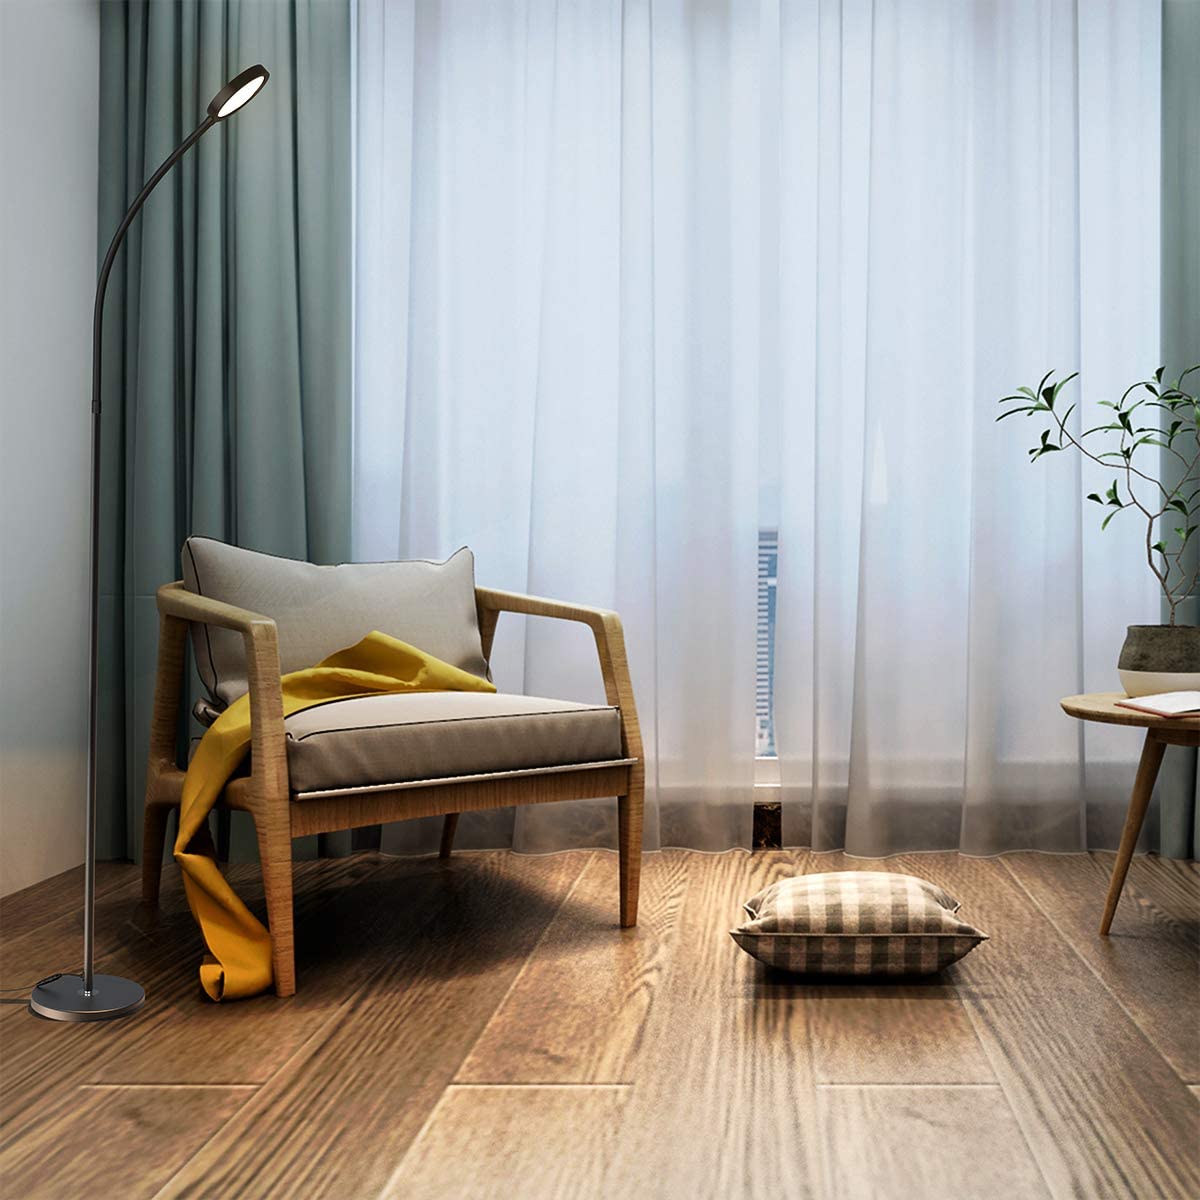 Dodocool Floor Lamp Remote Touch Control. 10 Unique Floor Lamps to Brighten Your Living Room - 10